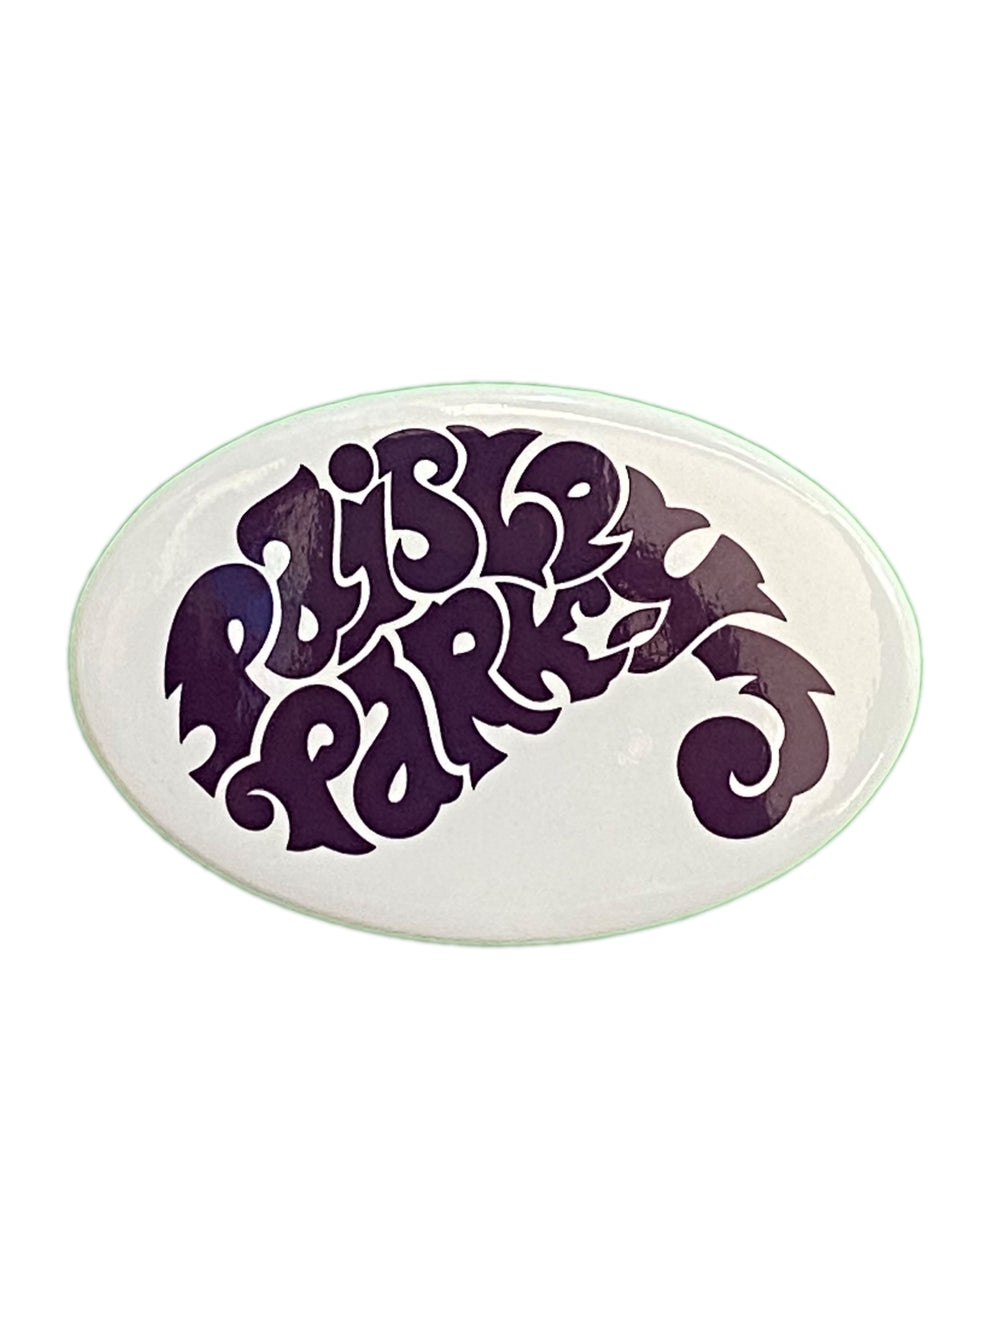 Prince – Paisley Park Official Merchandise Fridge Magnet Oval Logo NEW